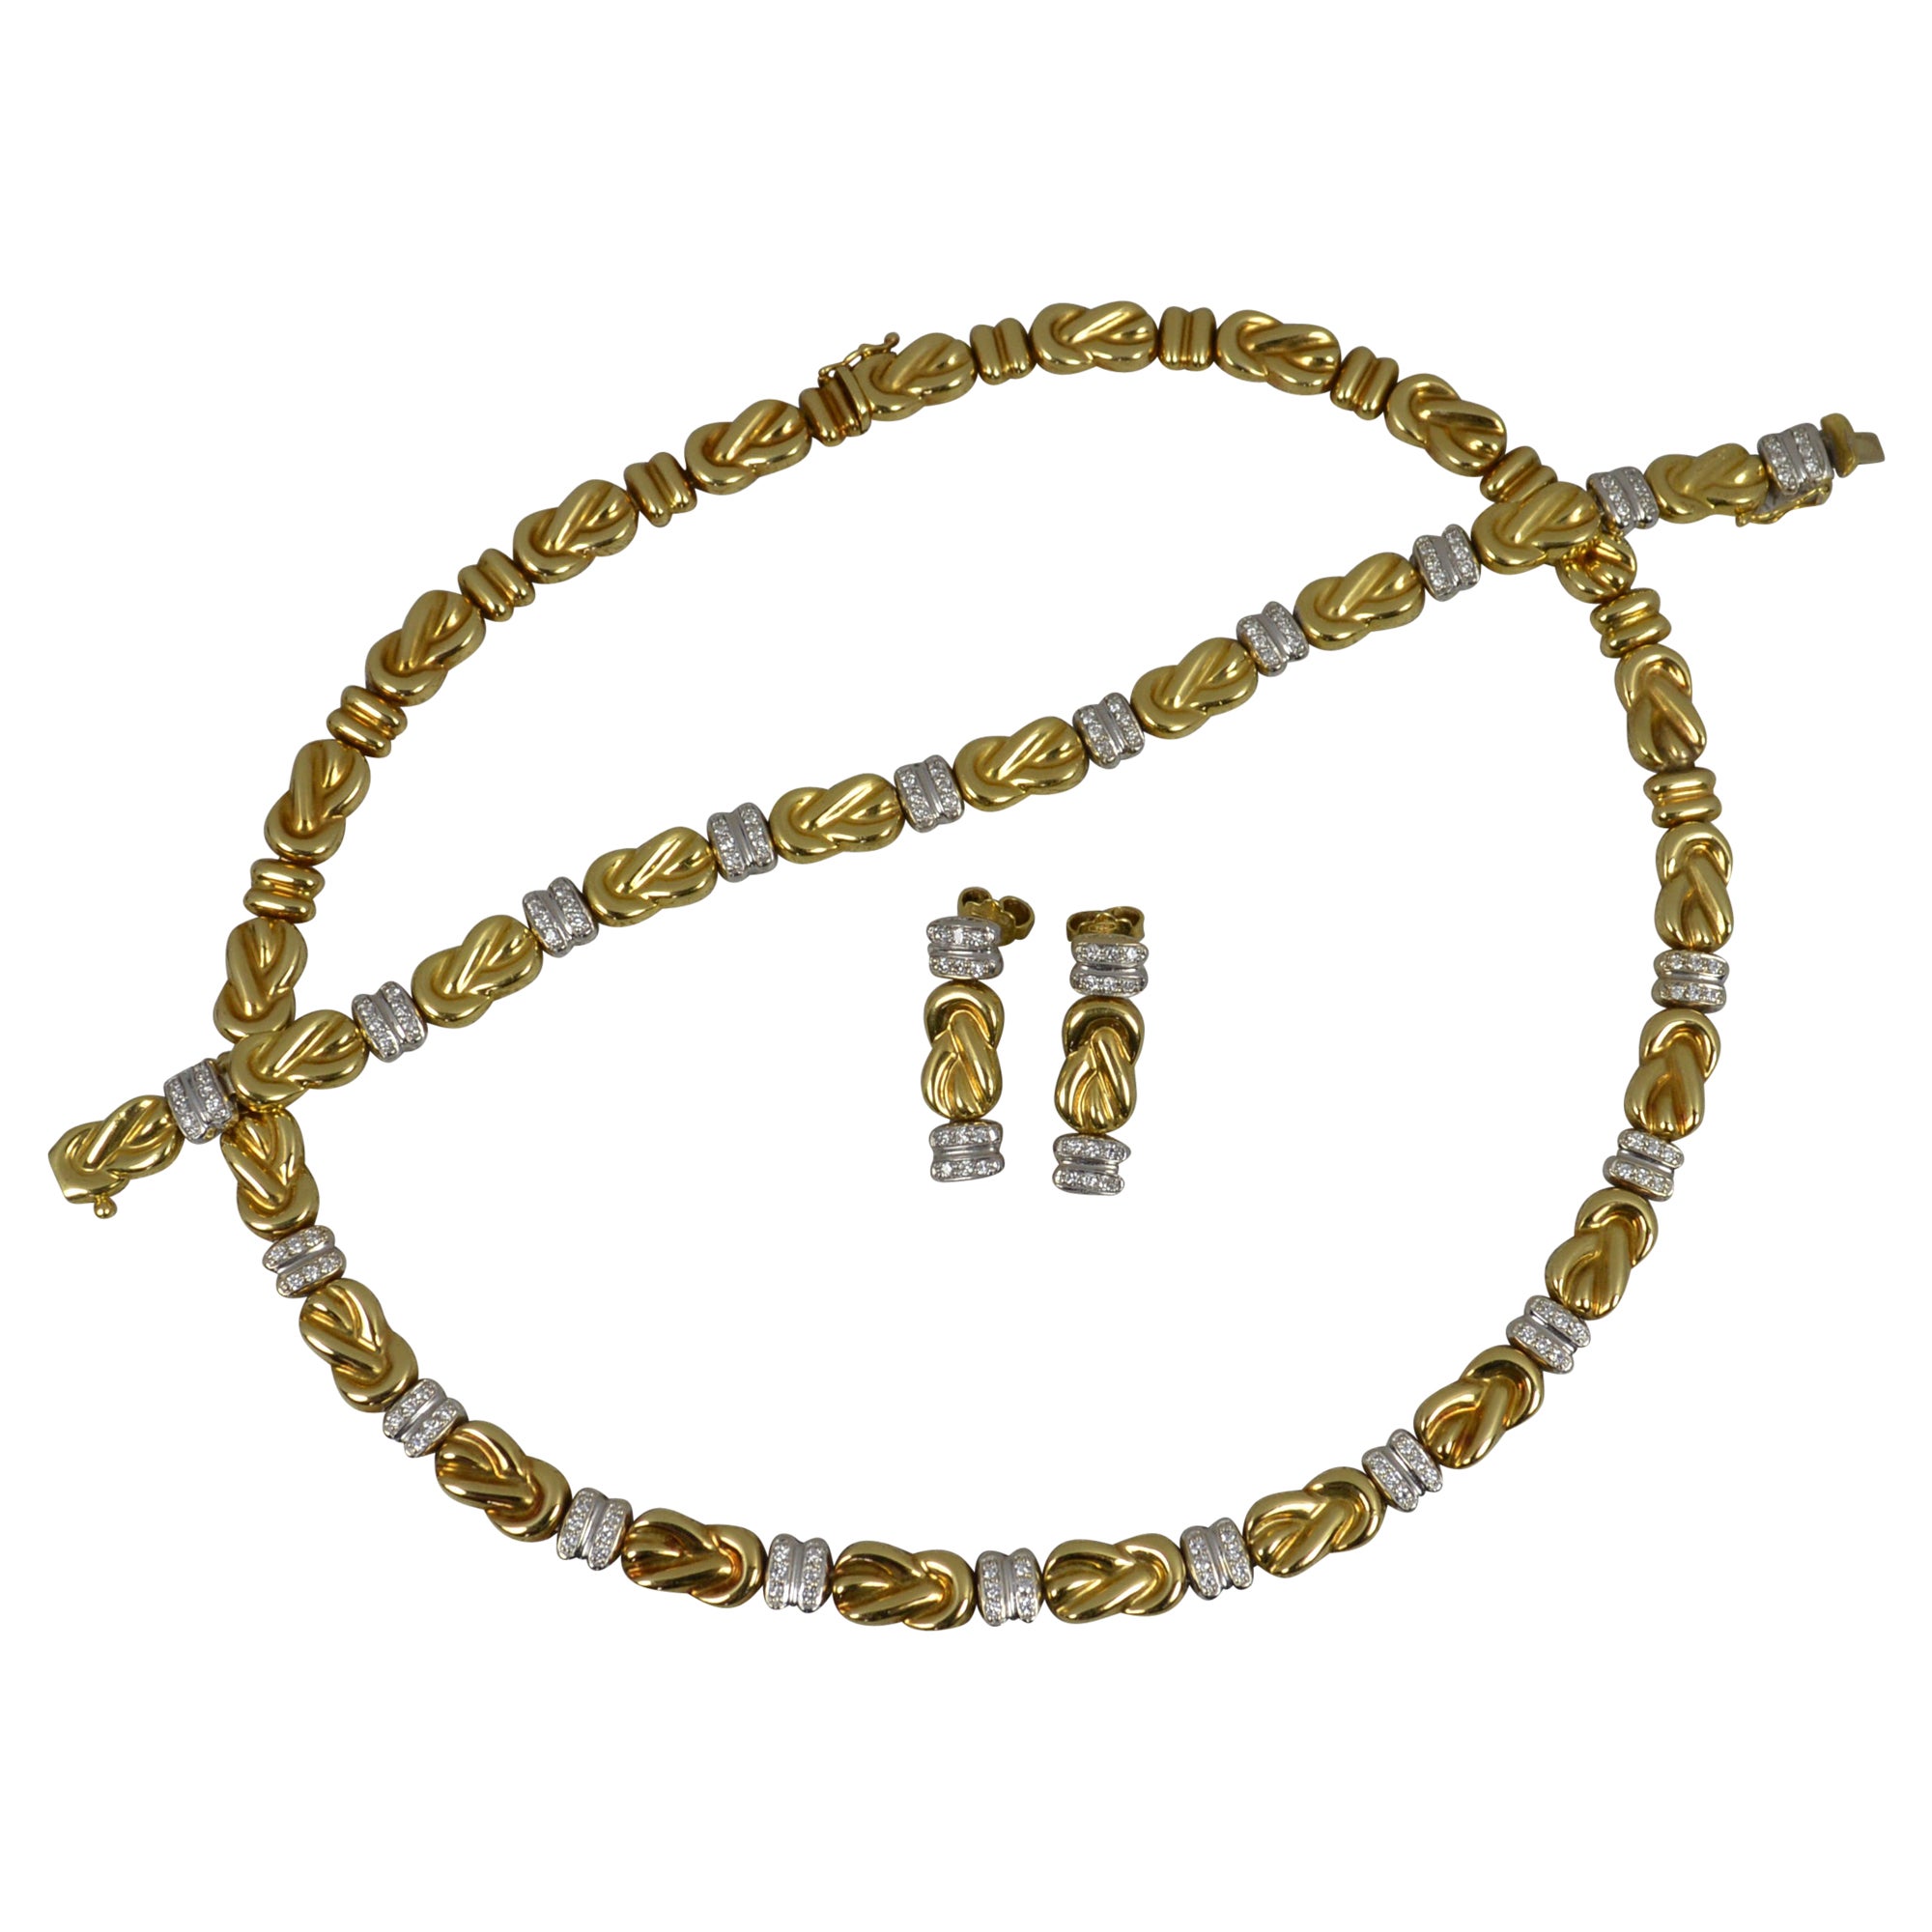 Chiampesan Designer 18 Carat Gold and Diamond Necklace Bracelet Earrings Suite